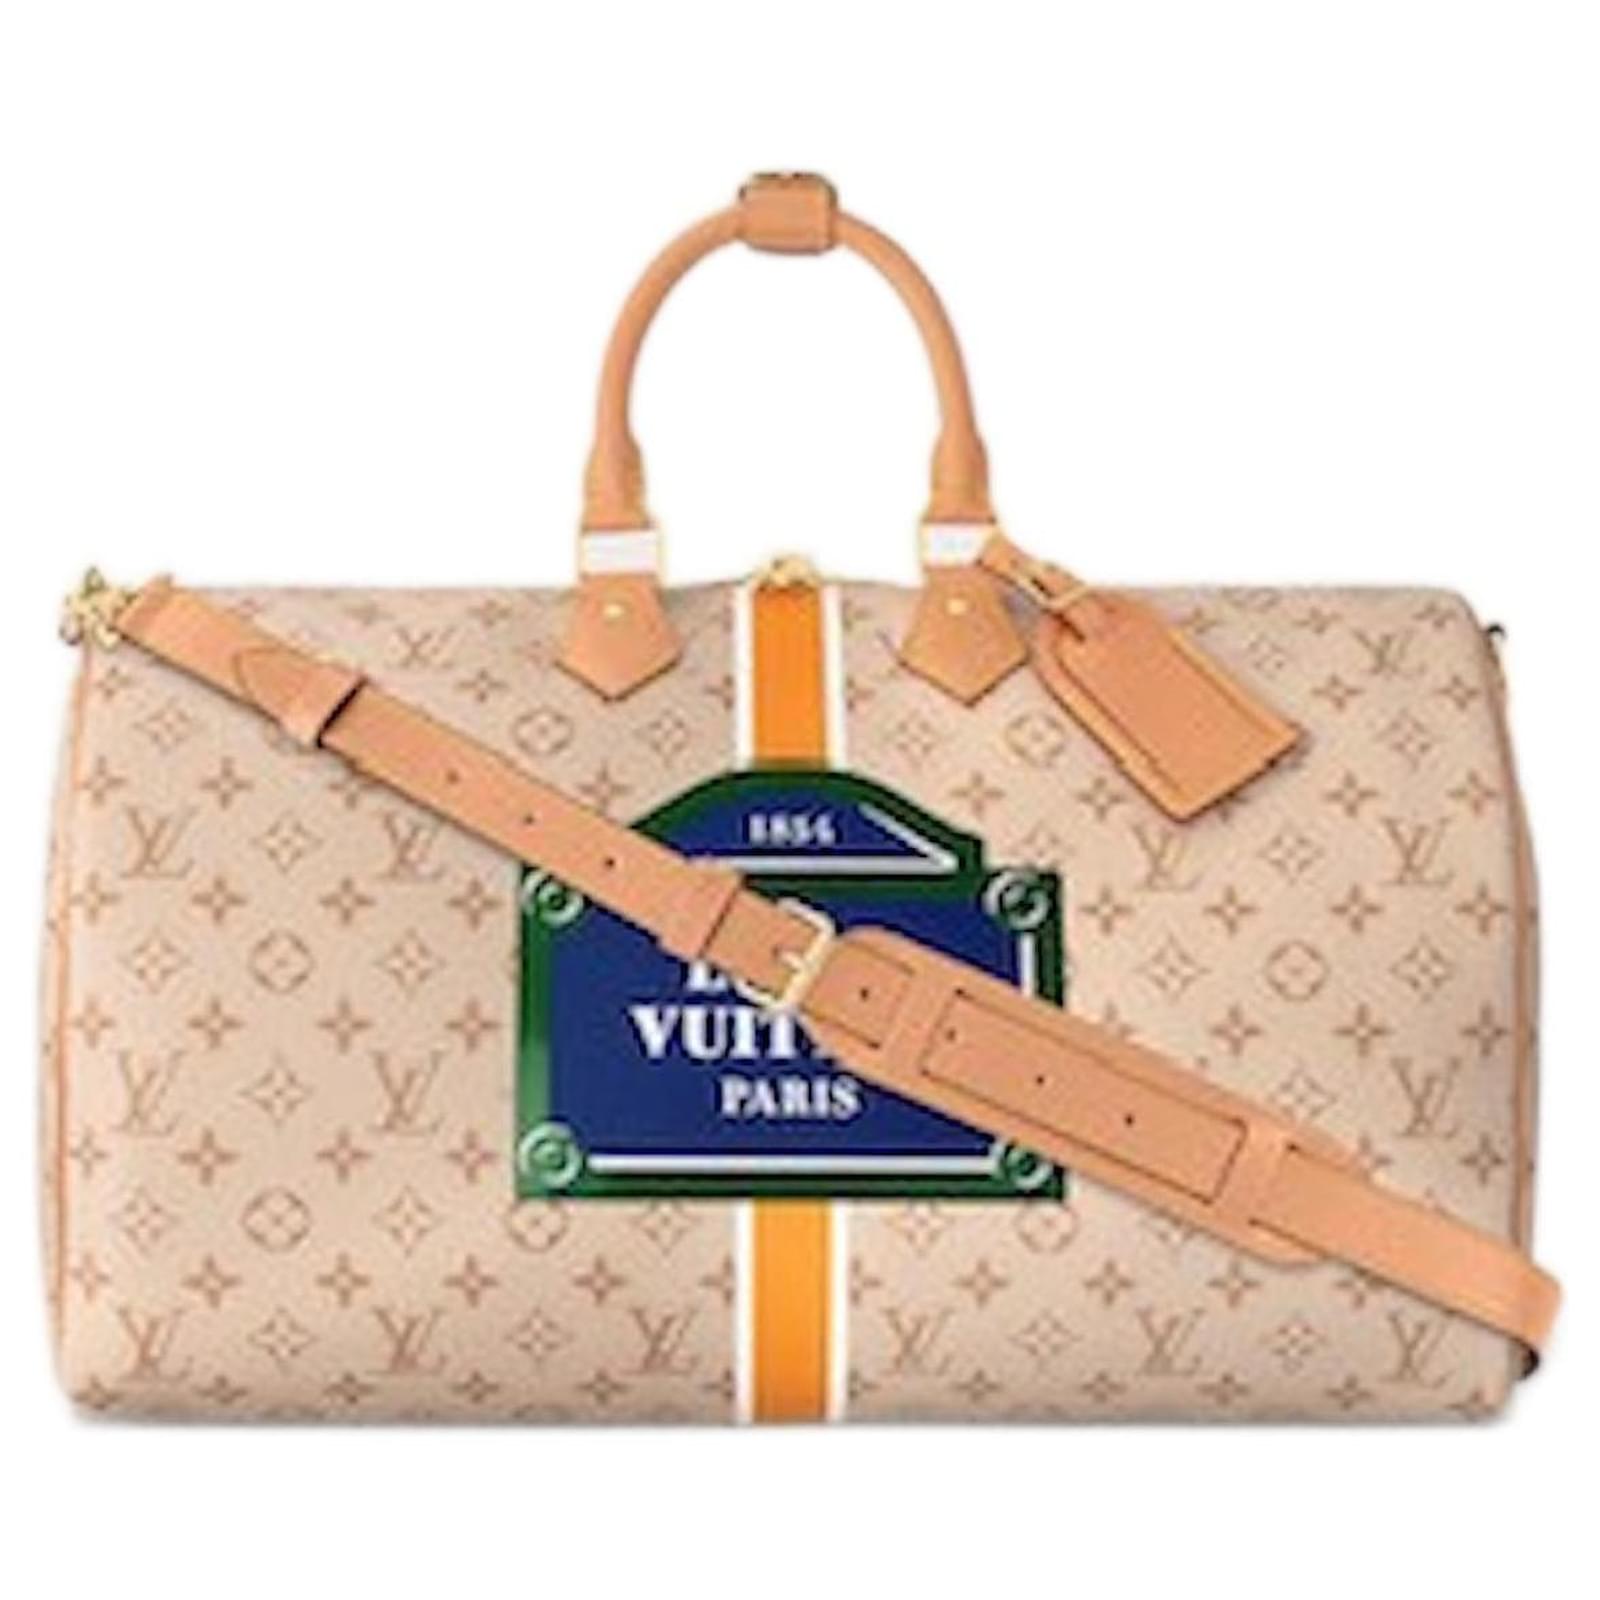 LV canvas leather travel bag brown beige - Louis Vuitton